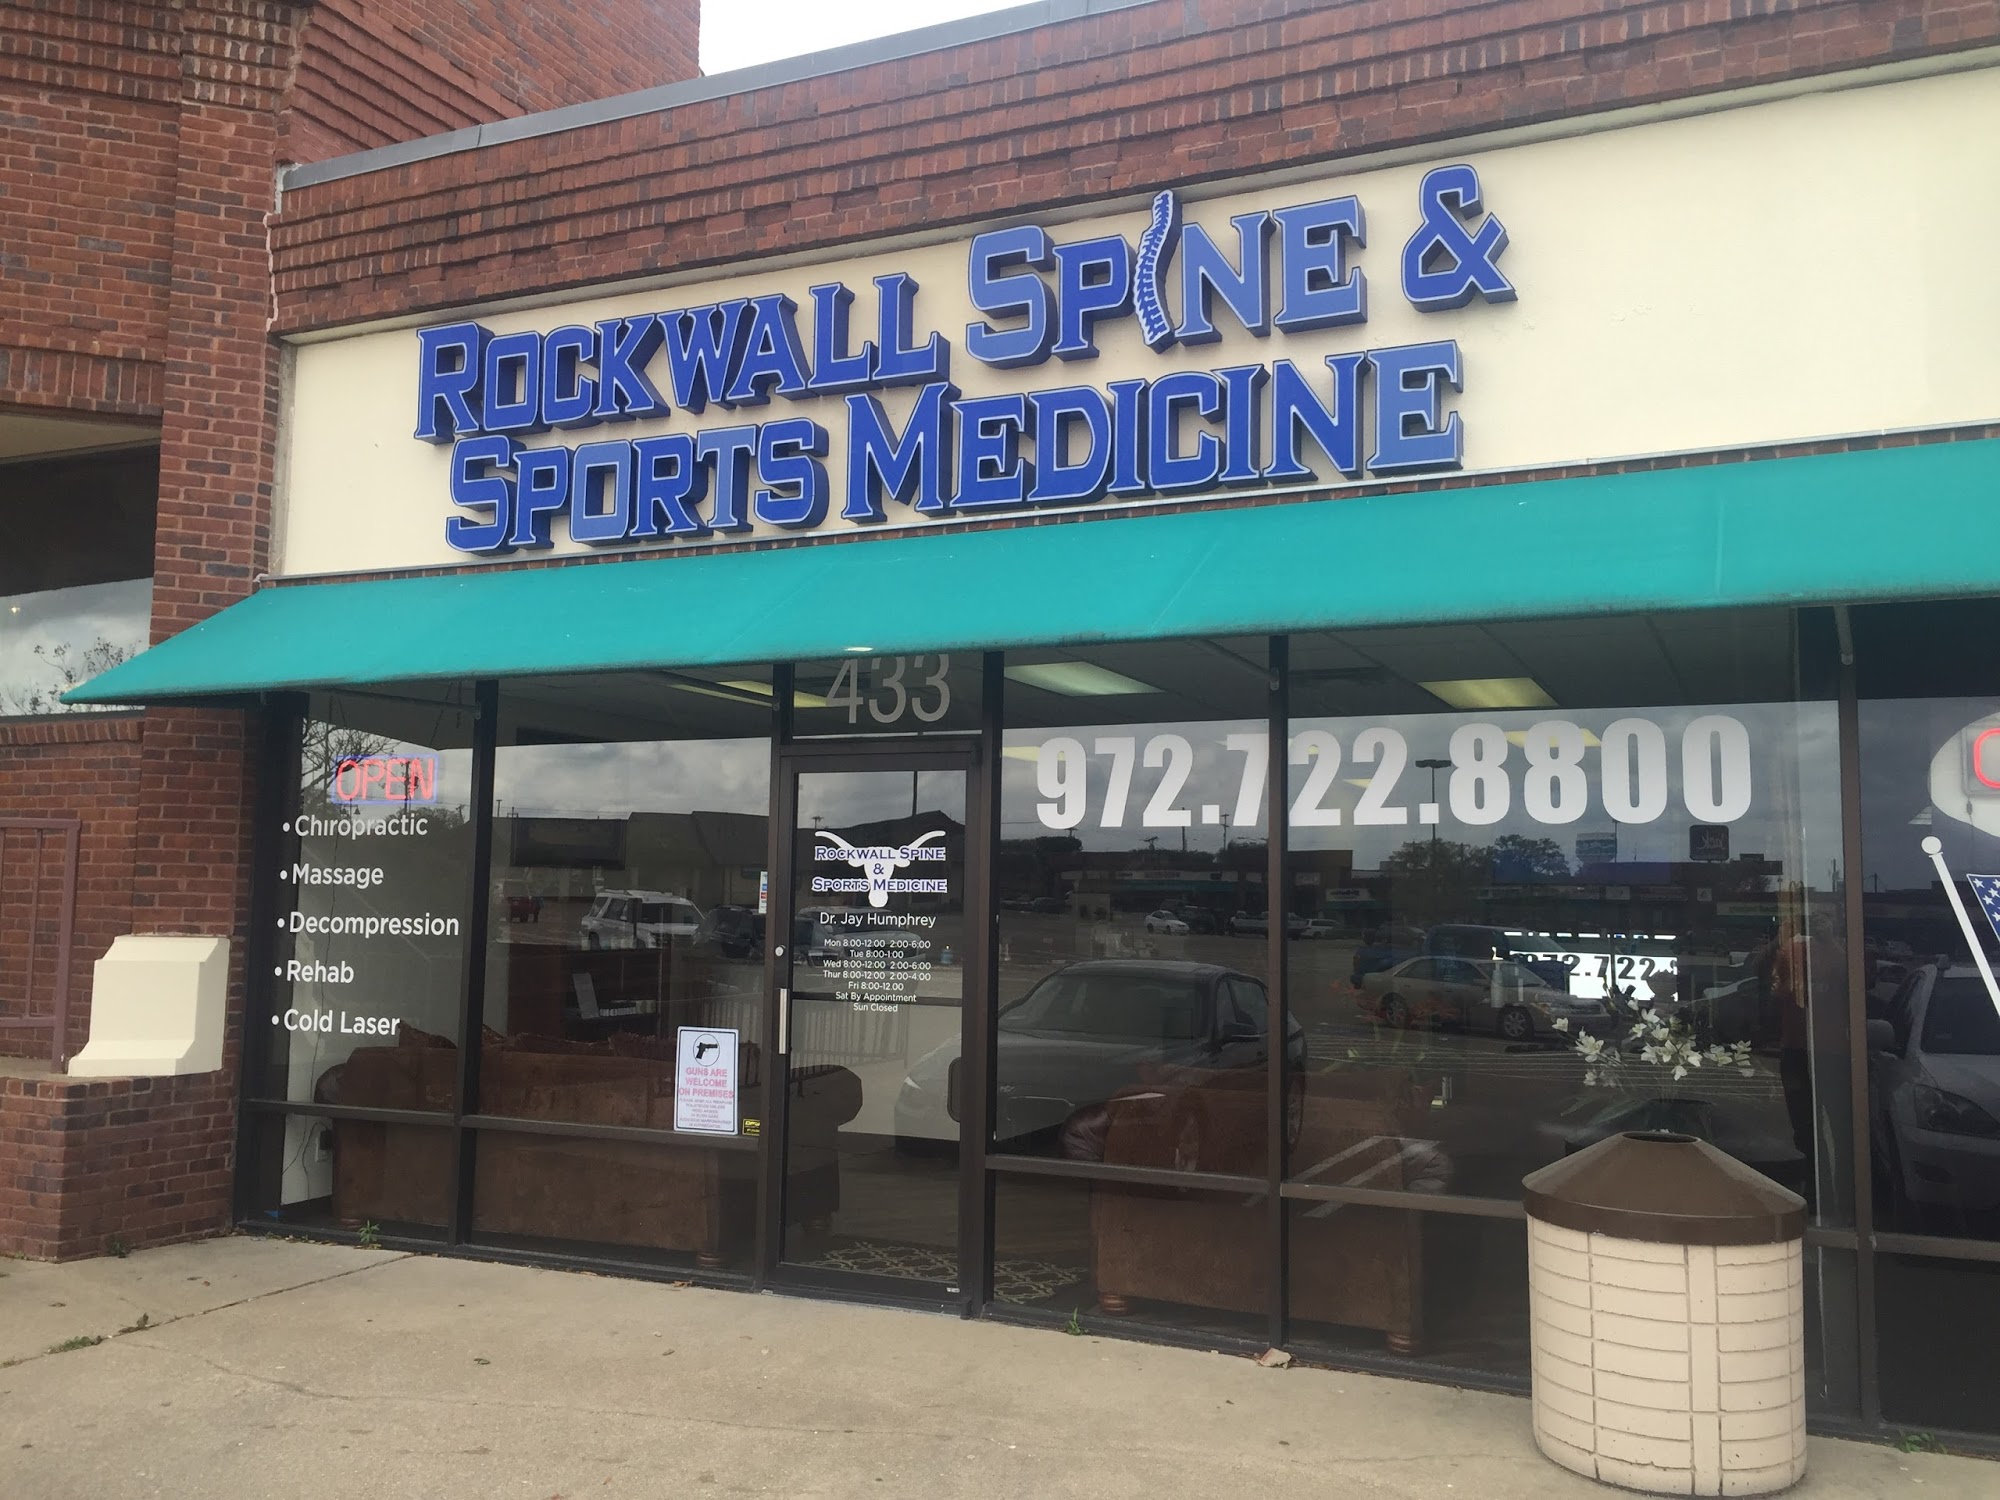 Rockwall Spine & Sports Medicine